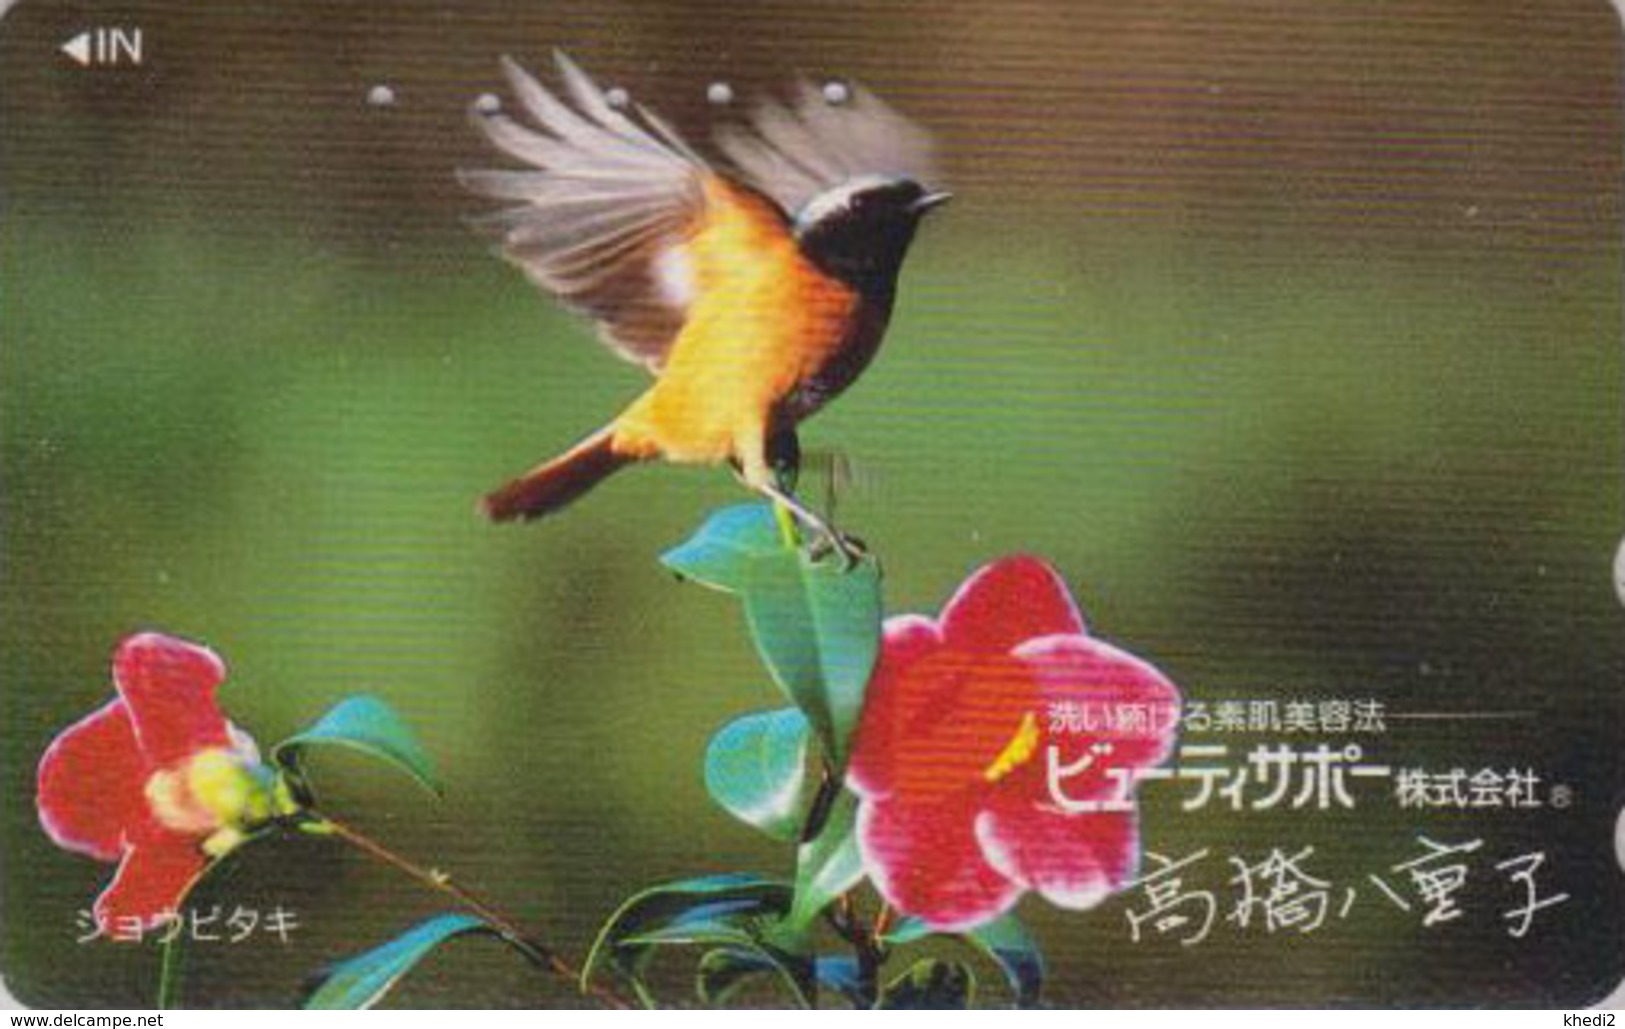 Télécarte Japon / 110-011 - Animal - OISEAU - ROUGEQUEUE AURORE - SONG BIRD Japan Phonecard - 4482 - Songbirds & Tree Dwellers